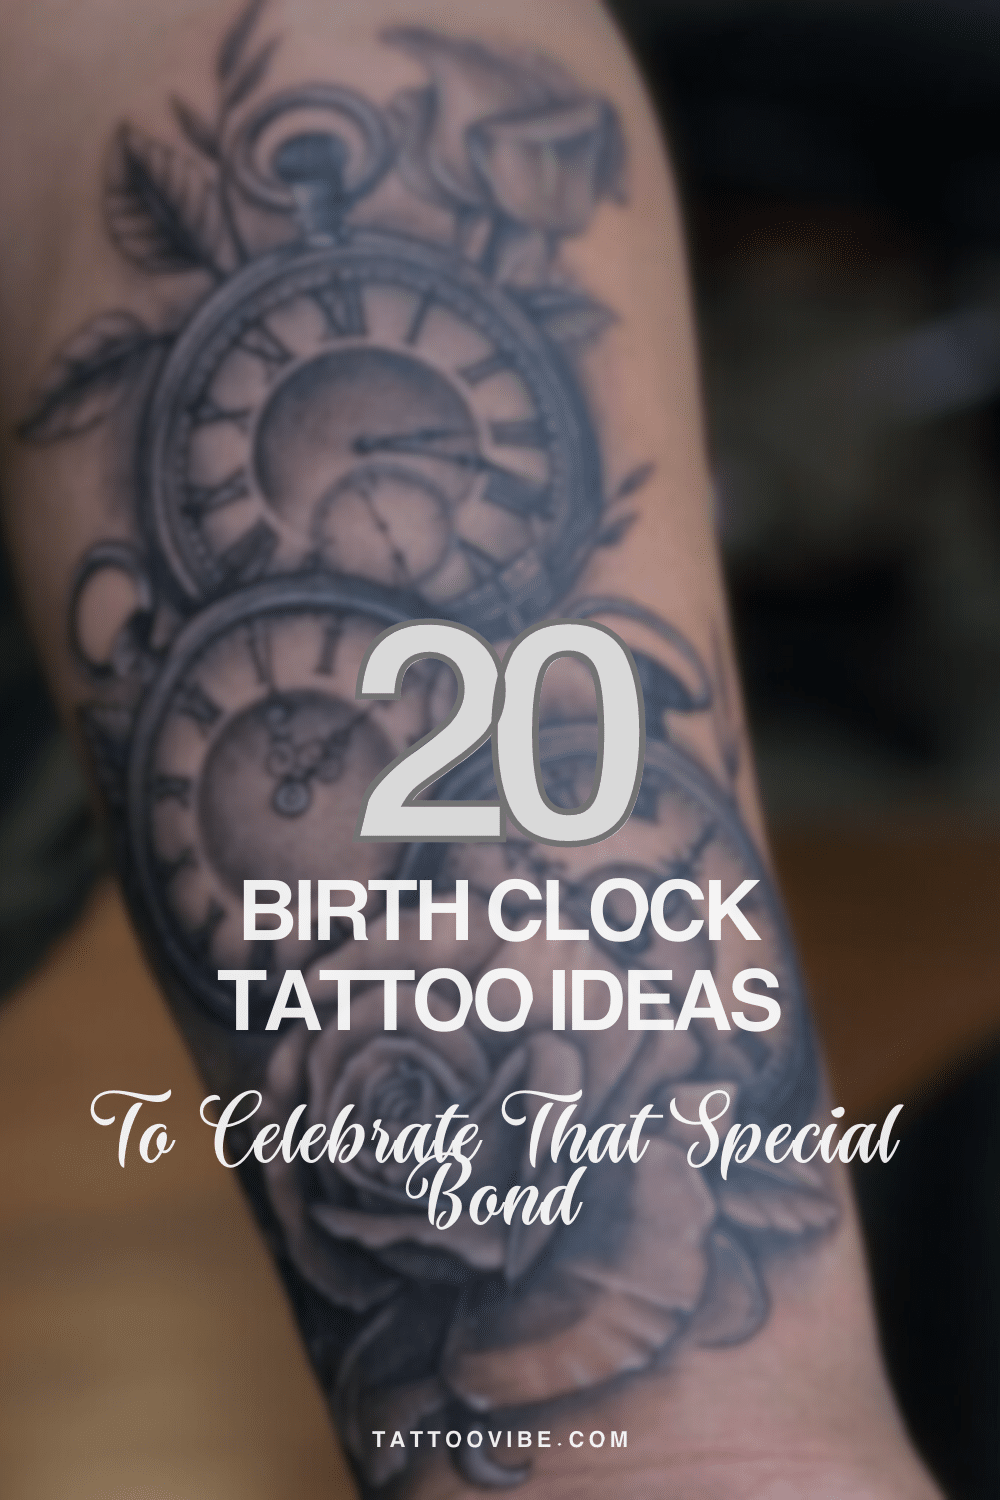 20 Geburt Uhr Tattoo Ideen zu feiern, dass besondere Bindung